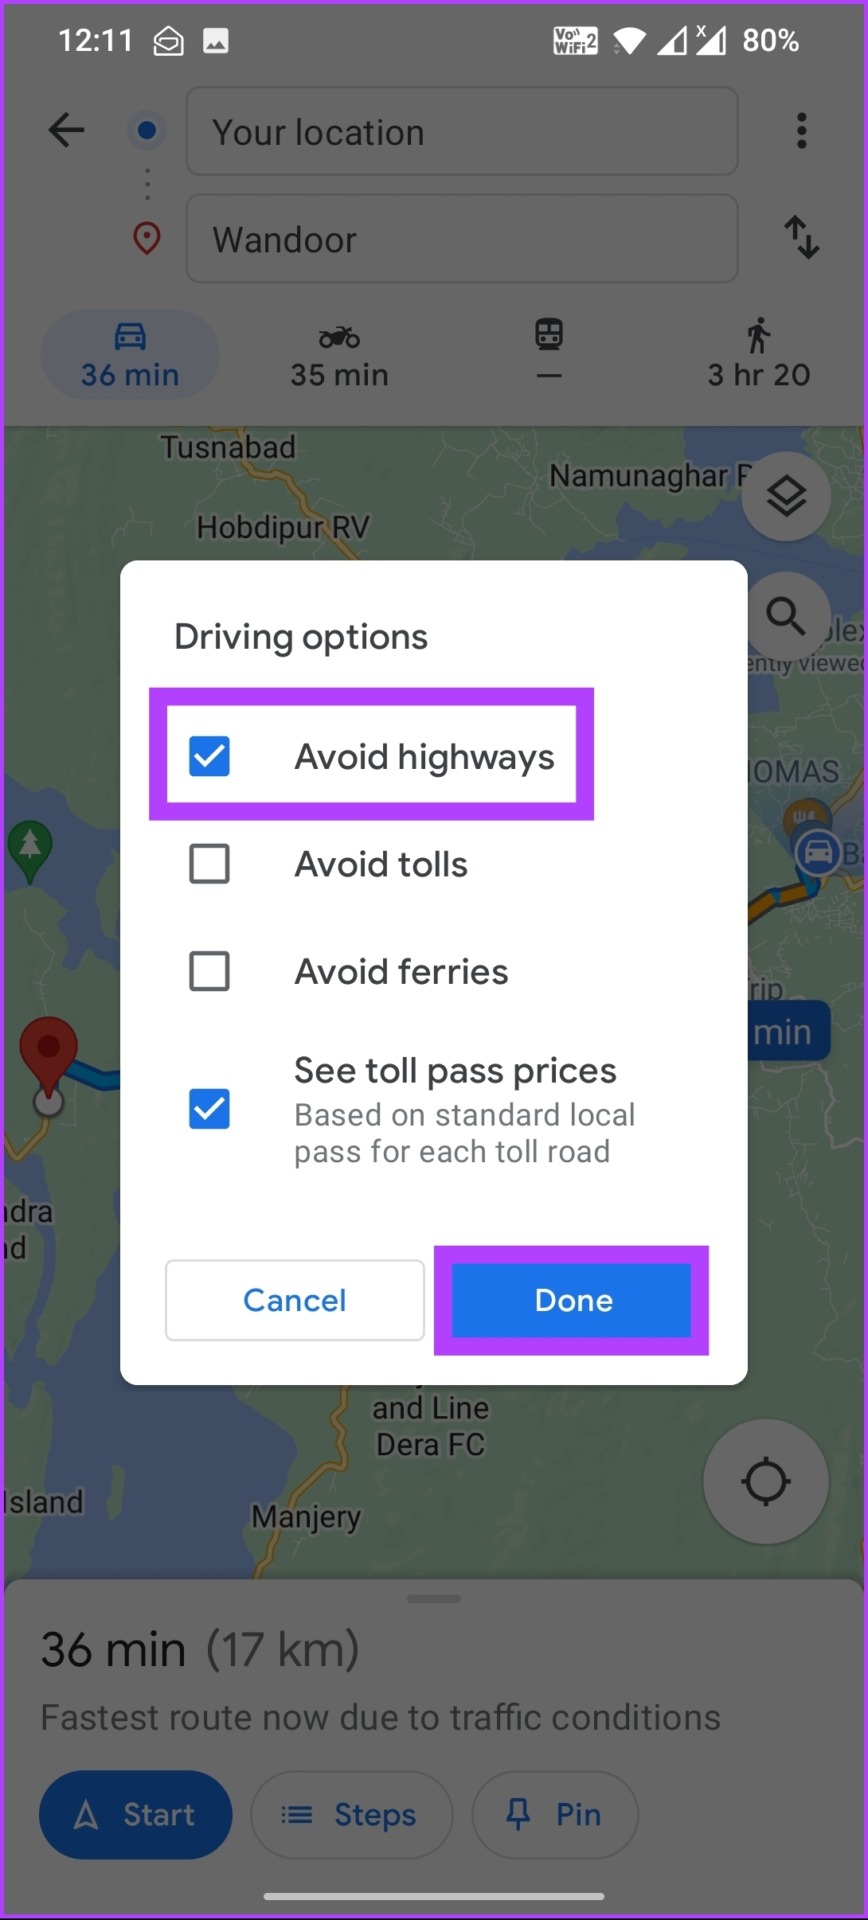 select Avoid highways